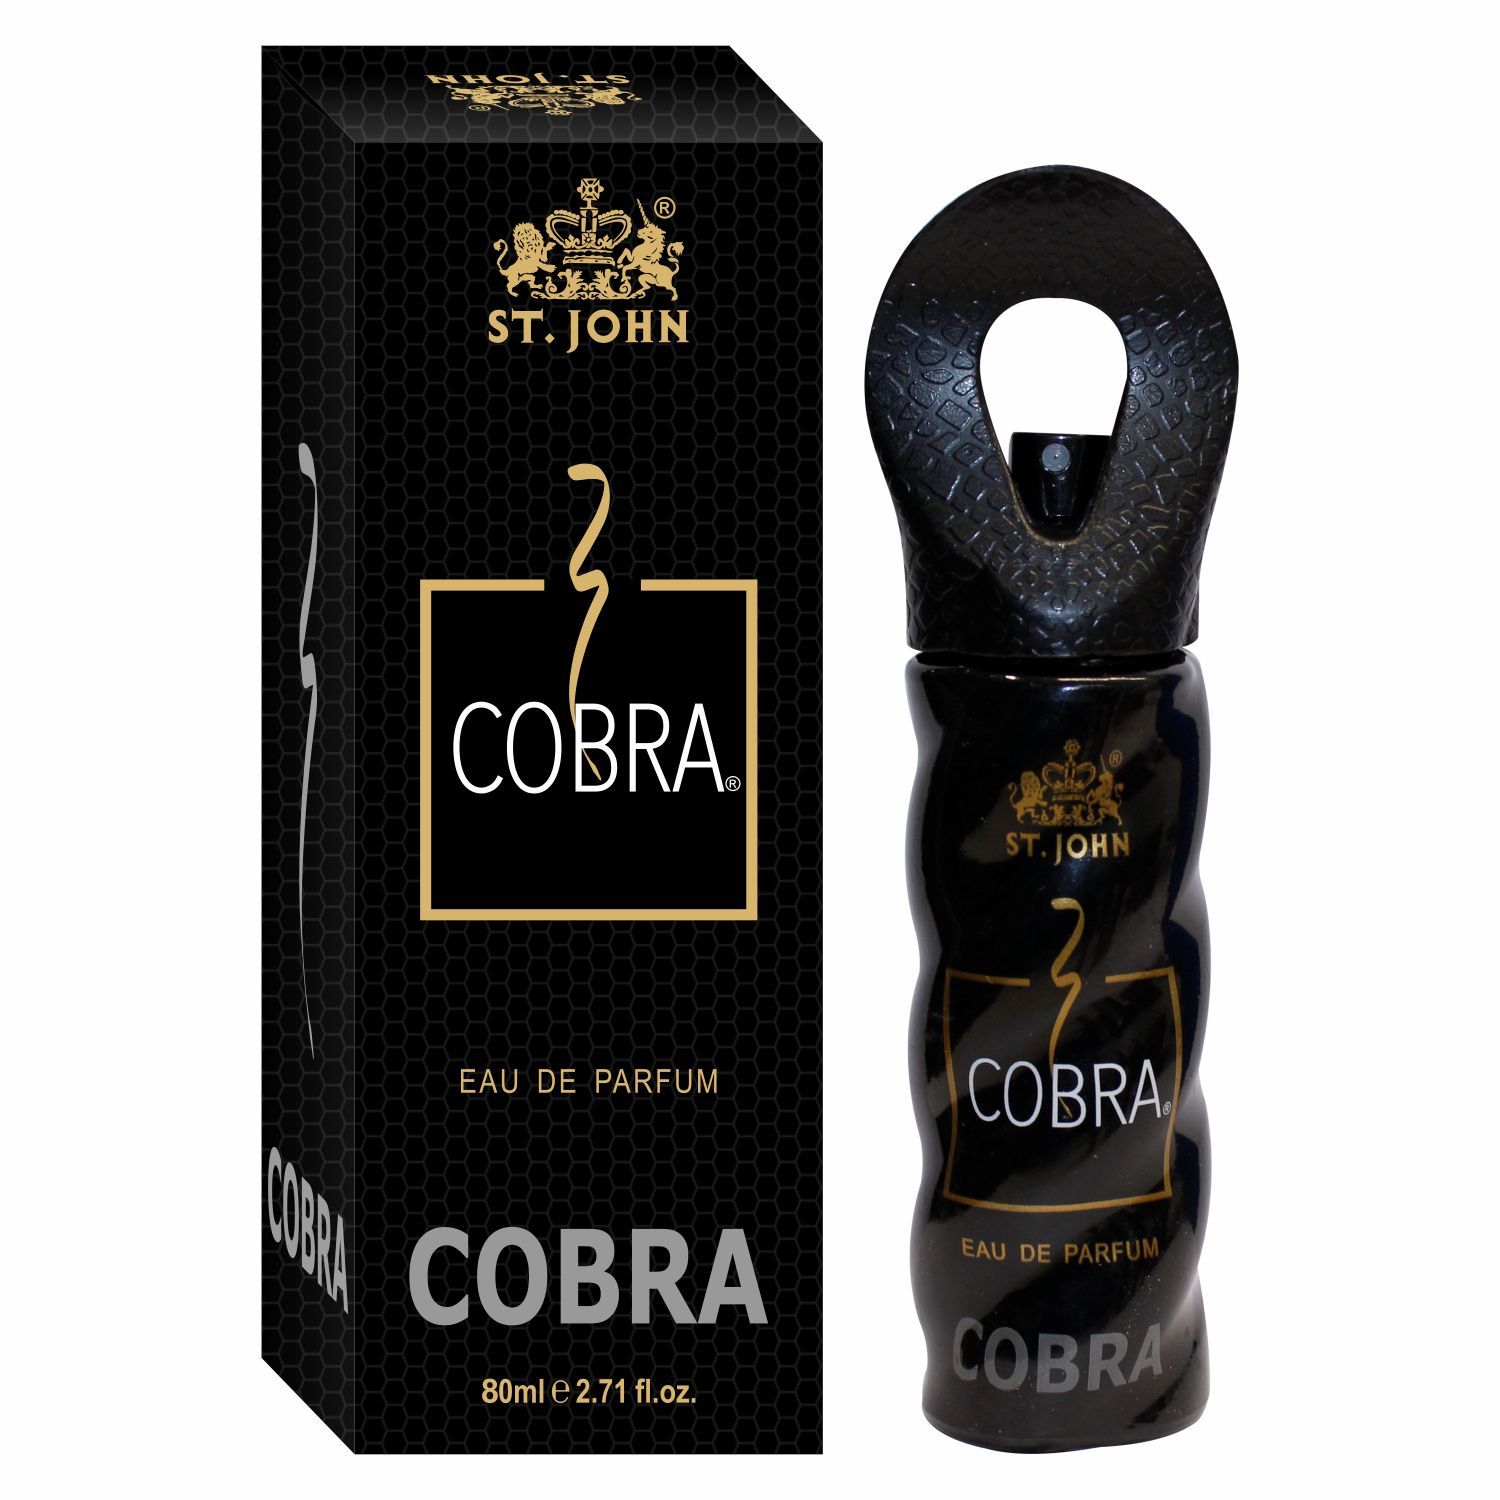 ST-JOHN Cobra Perfume Long Lasting 80 ML Eau de Parfum - 80 ml (For Men & Women)